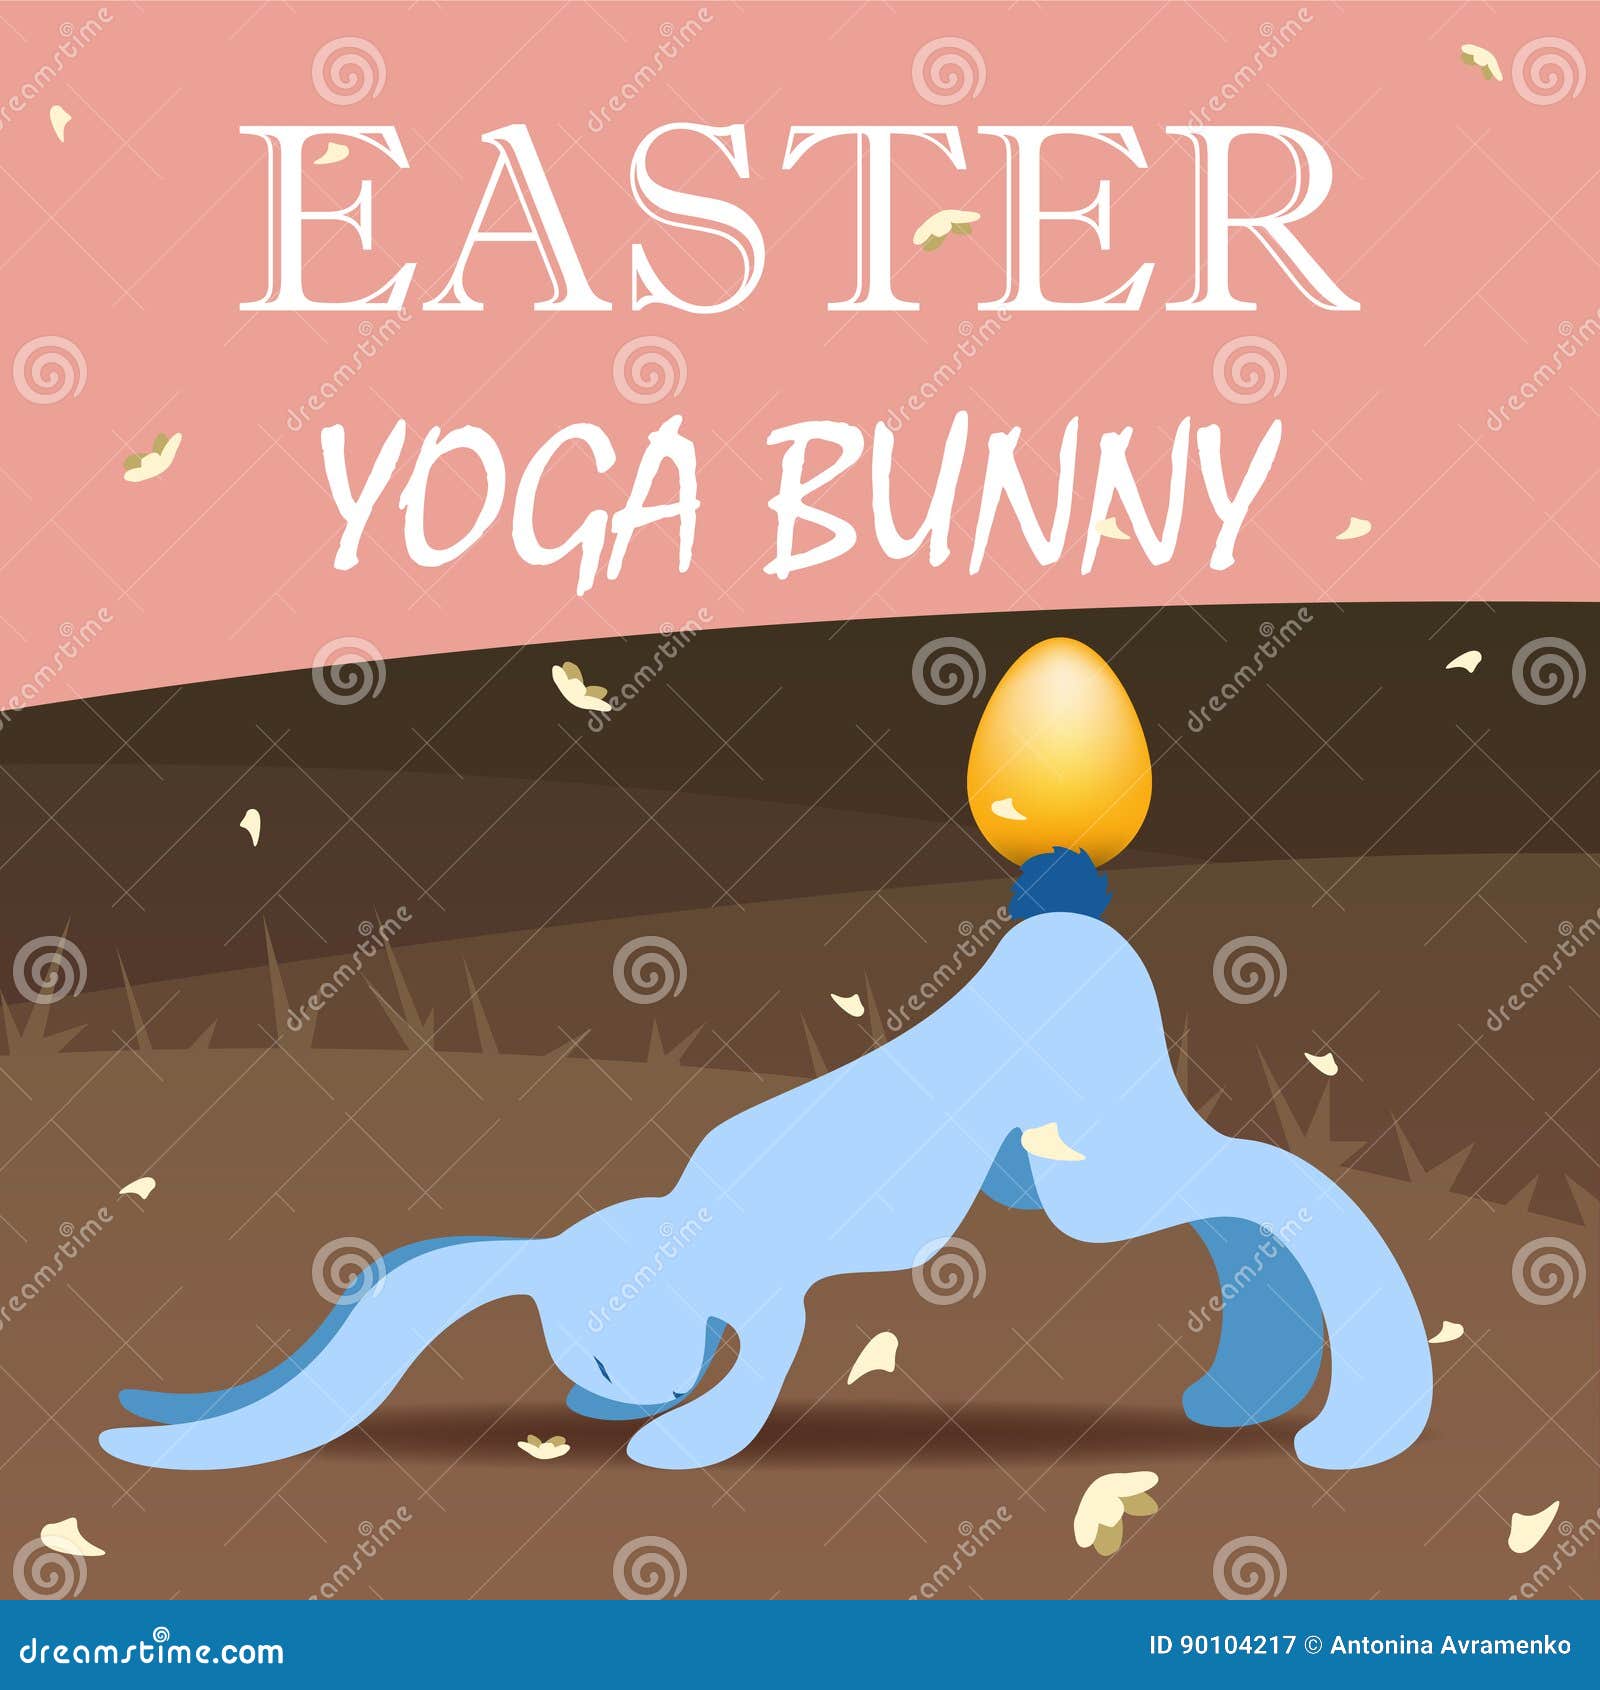 Easter yoga bunny. stock illustration. Illustration of drawing